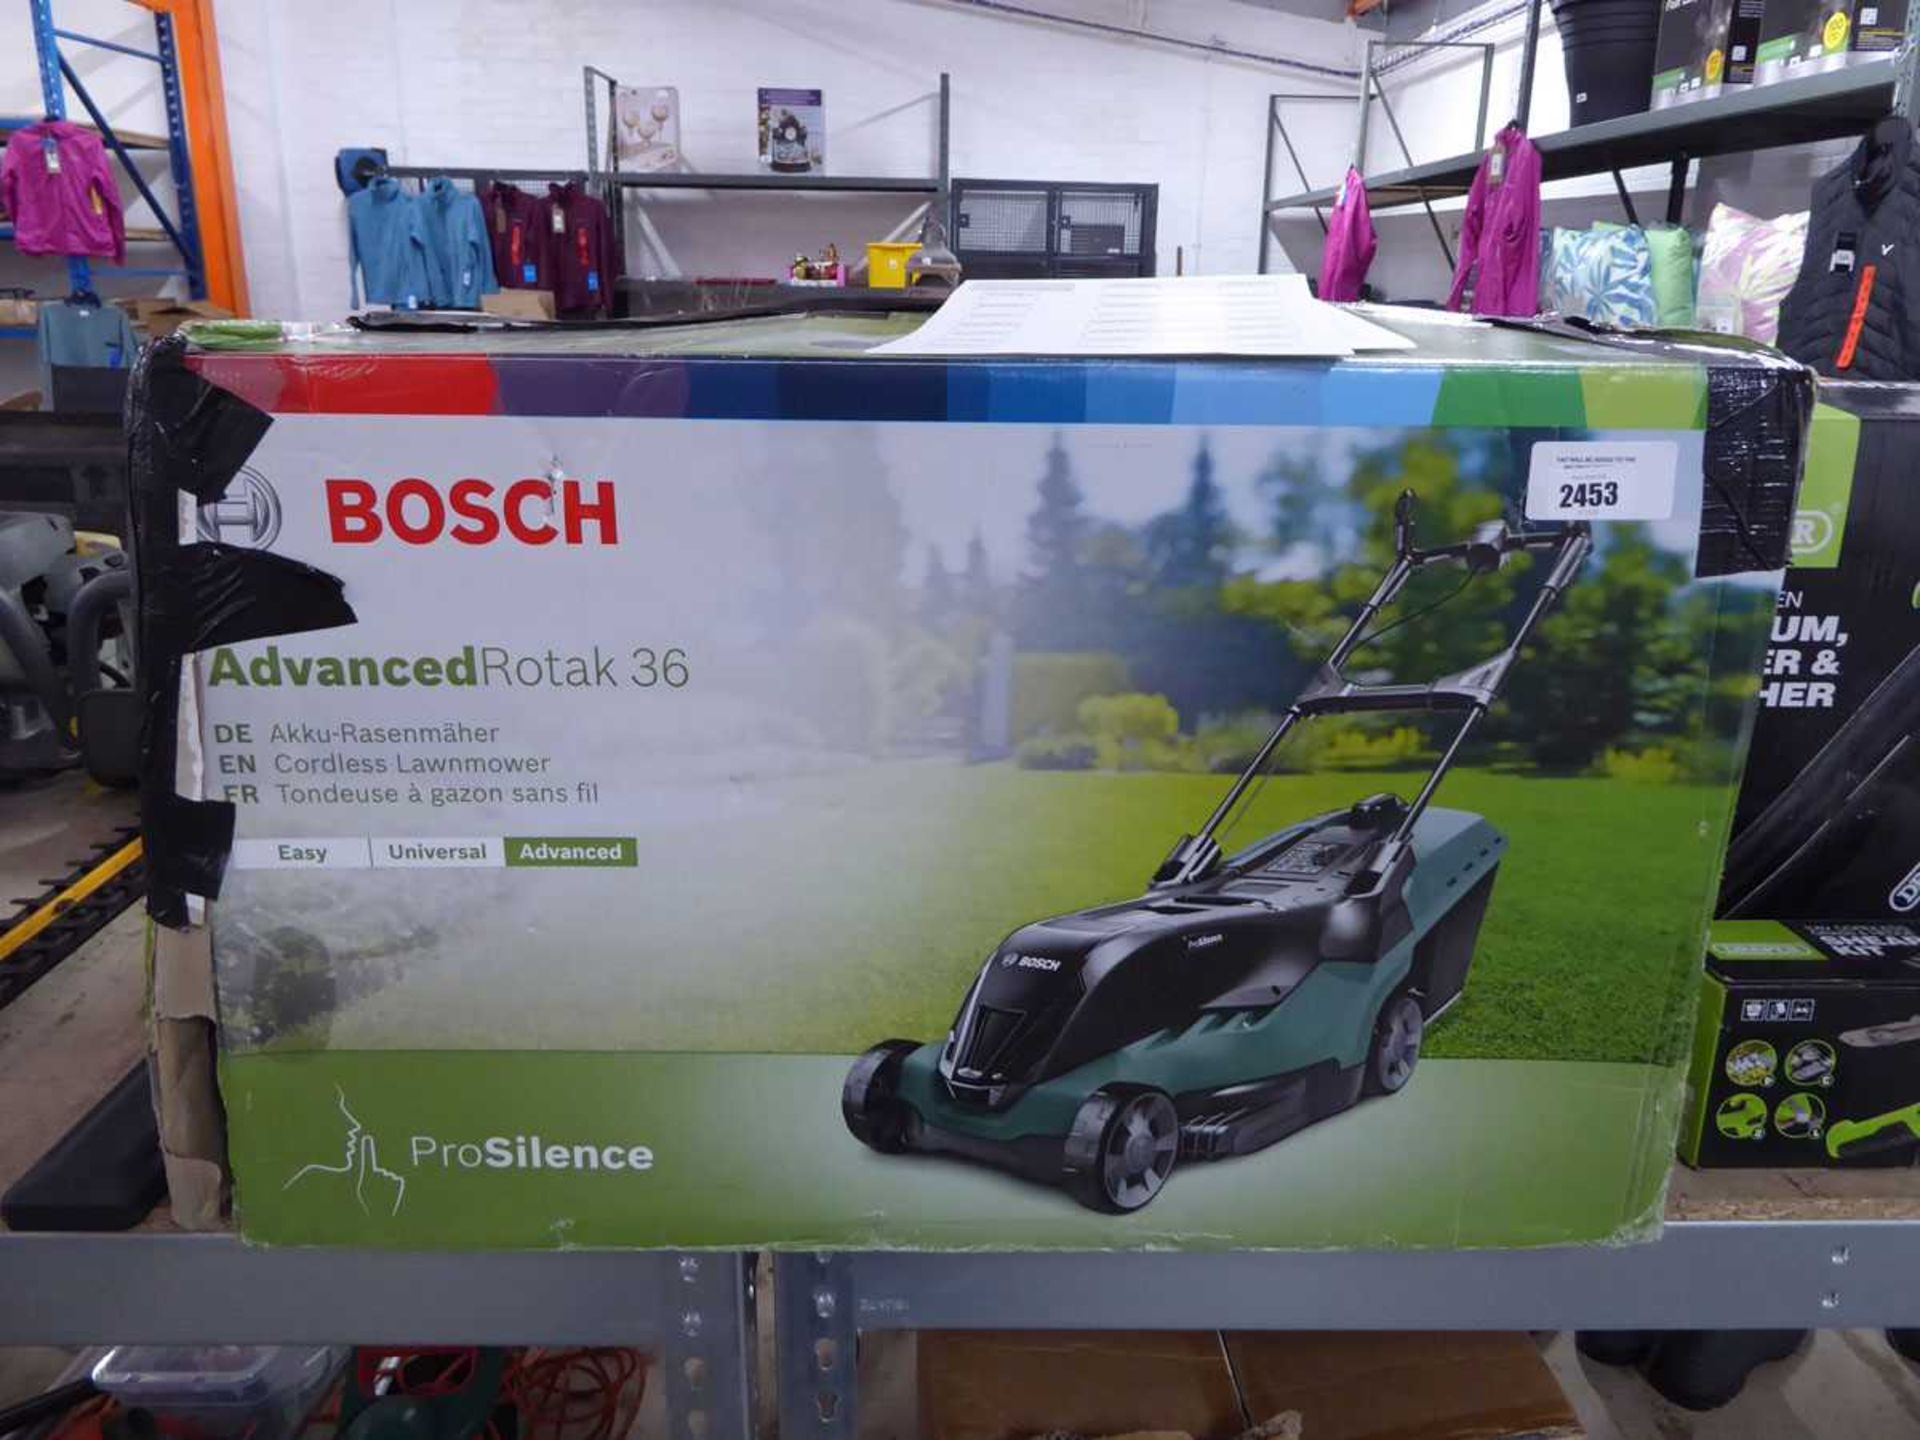 Bosch Advanced Rotak 36 battery powered lawnmower